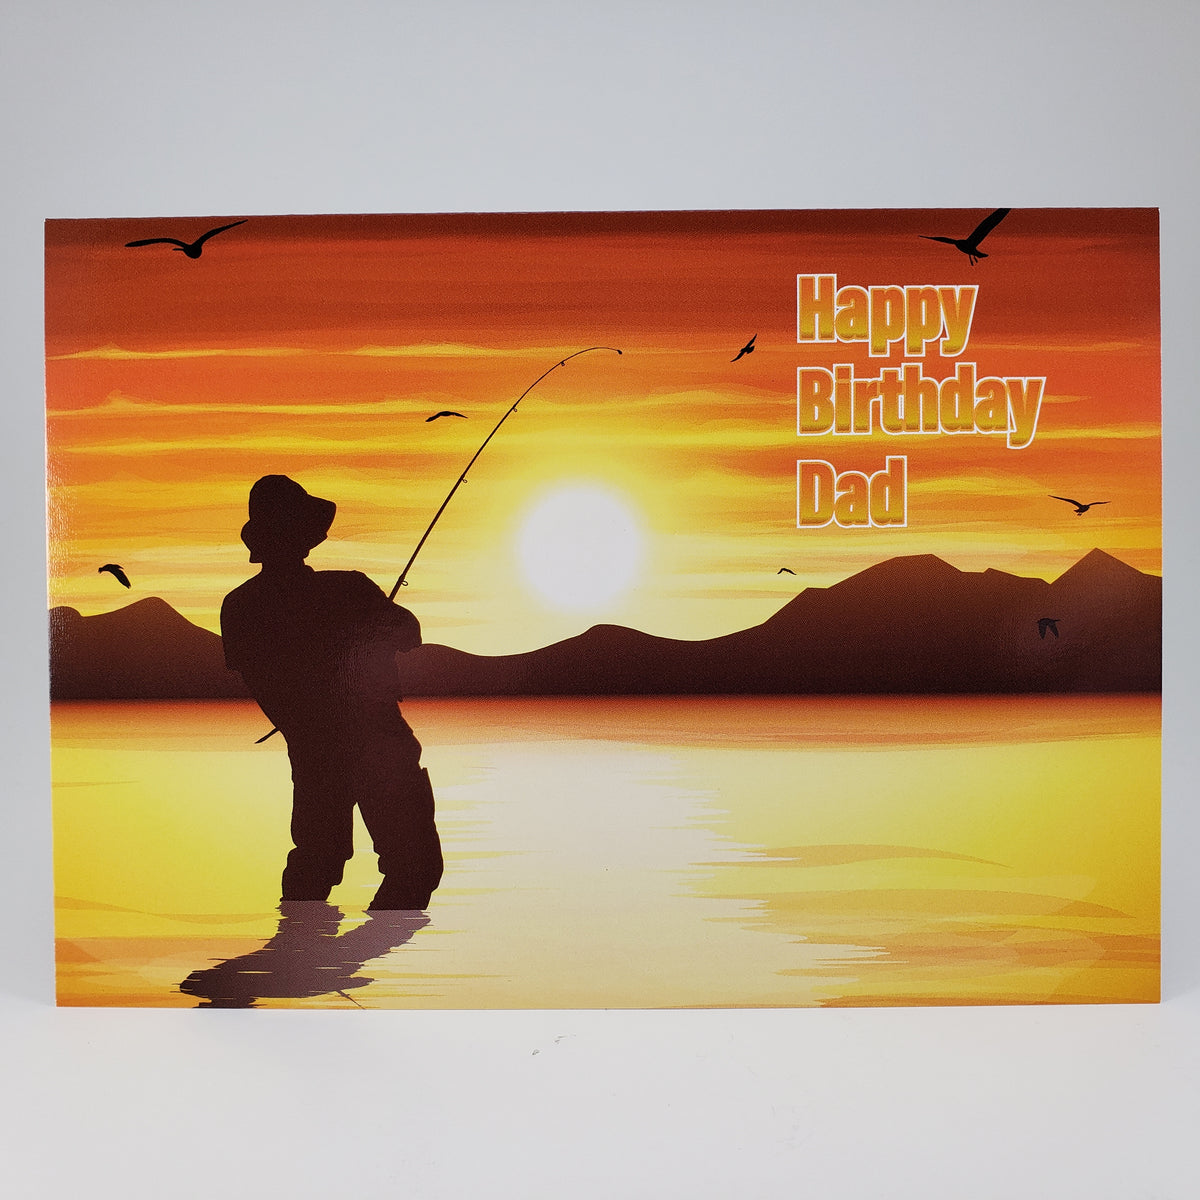 Fishing Dad Birthday Card – The Alaska Greeting Card Company